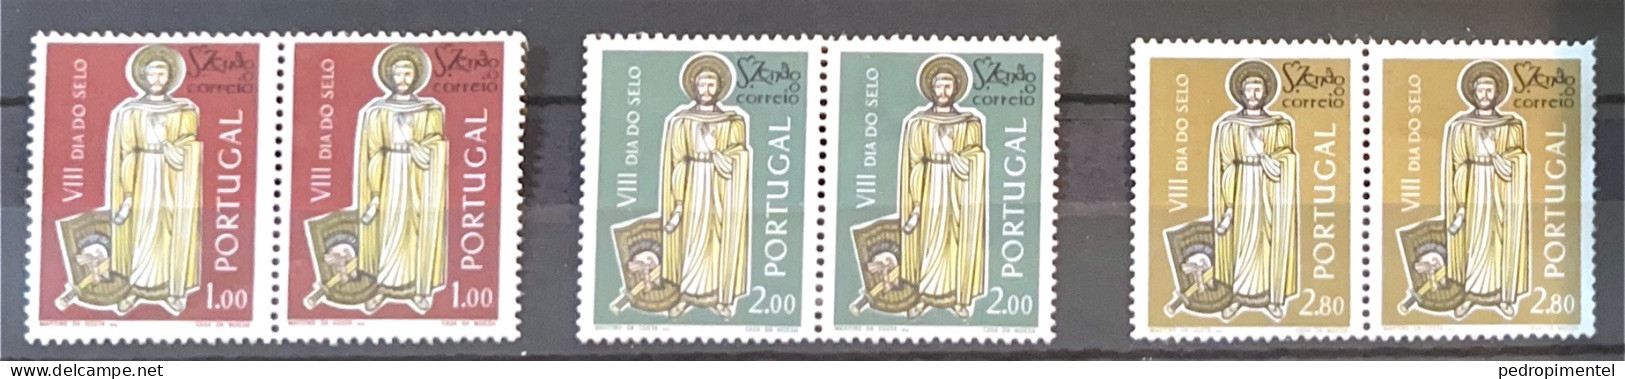 Portugal 1962 "Saint Zenon" Condition MNH #901-903 (pair) - Ongebruikt